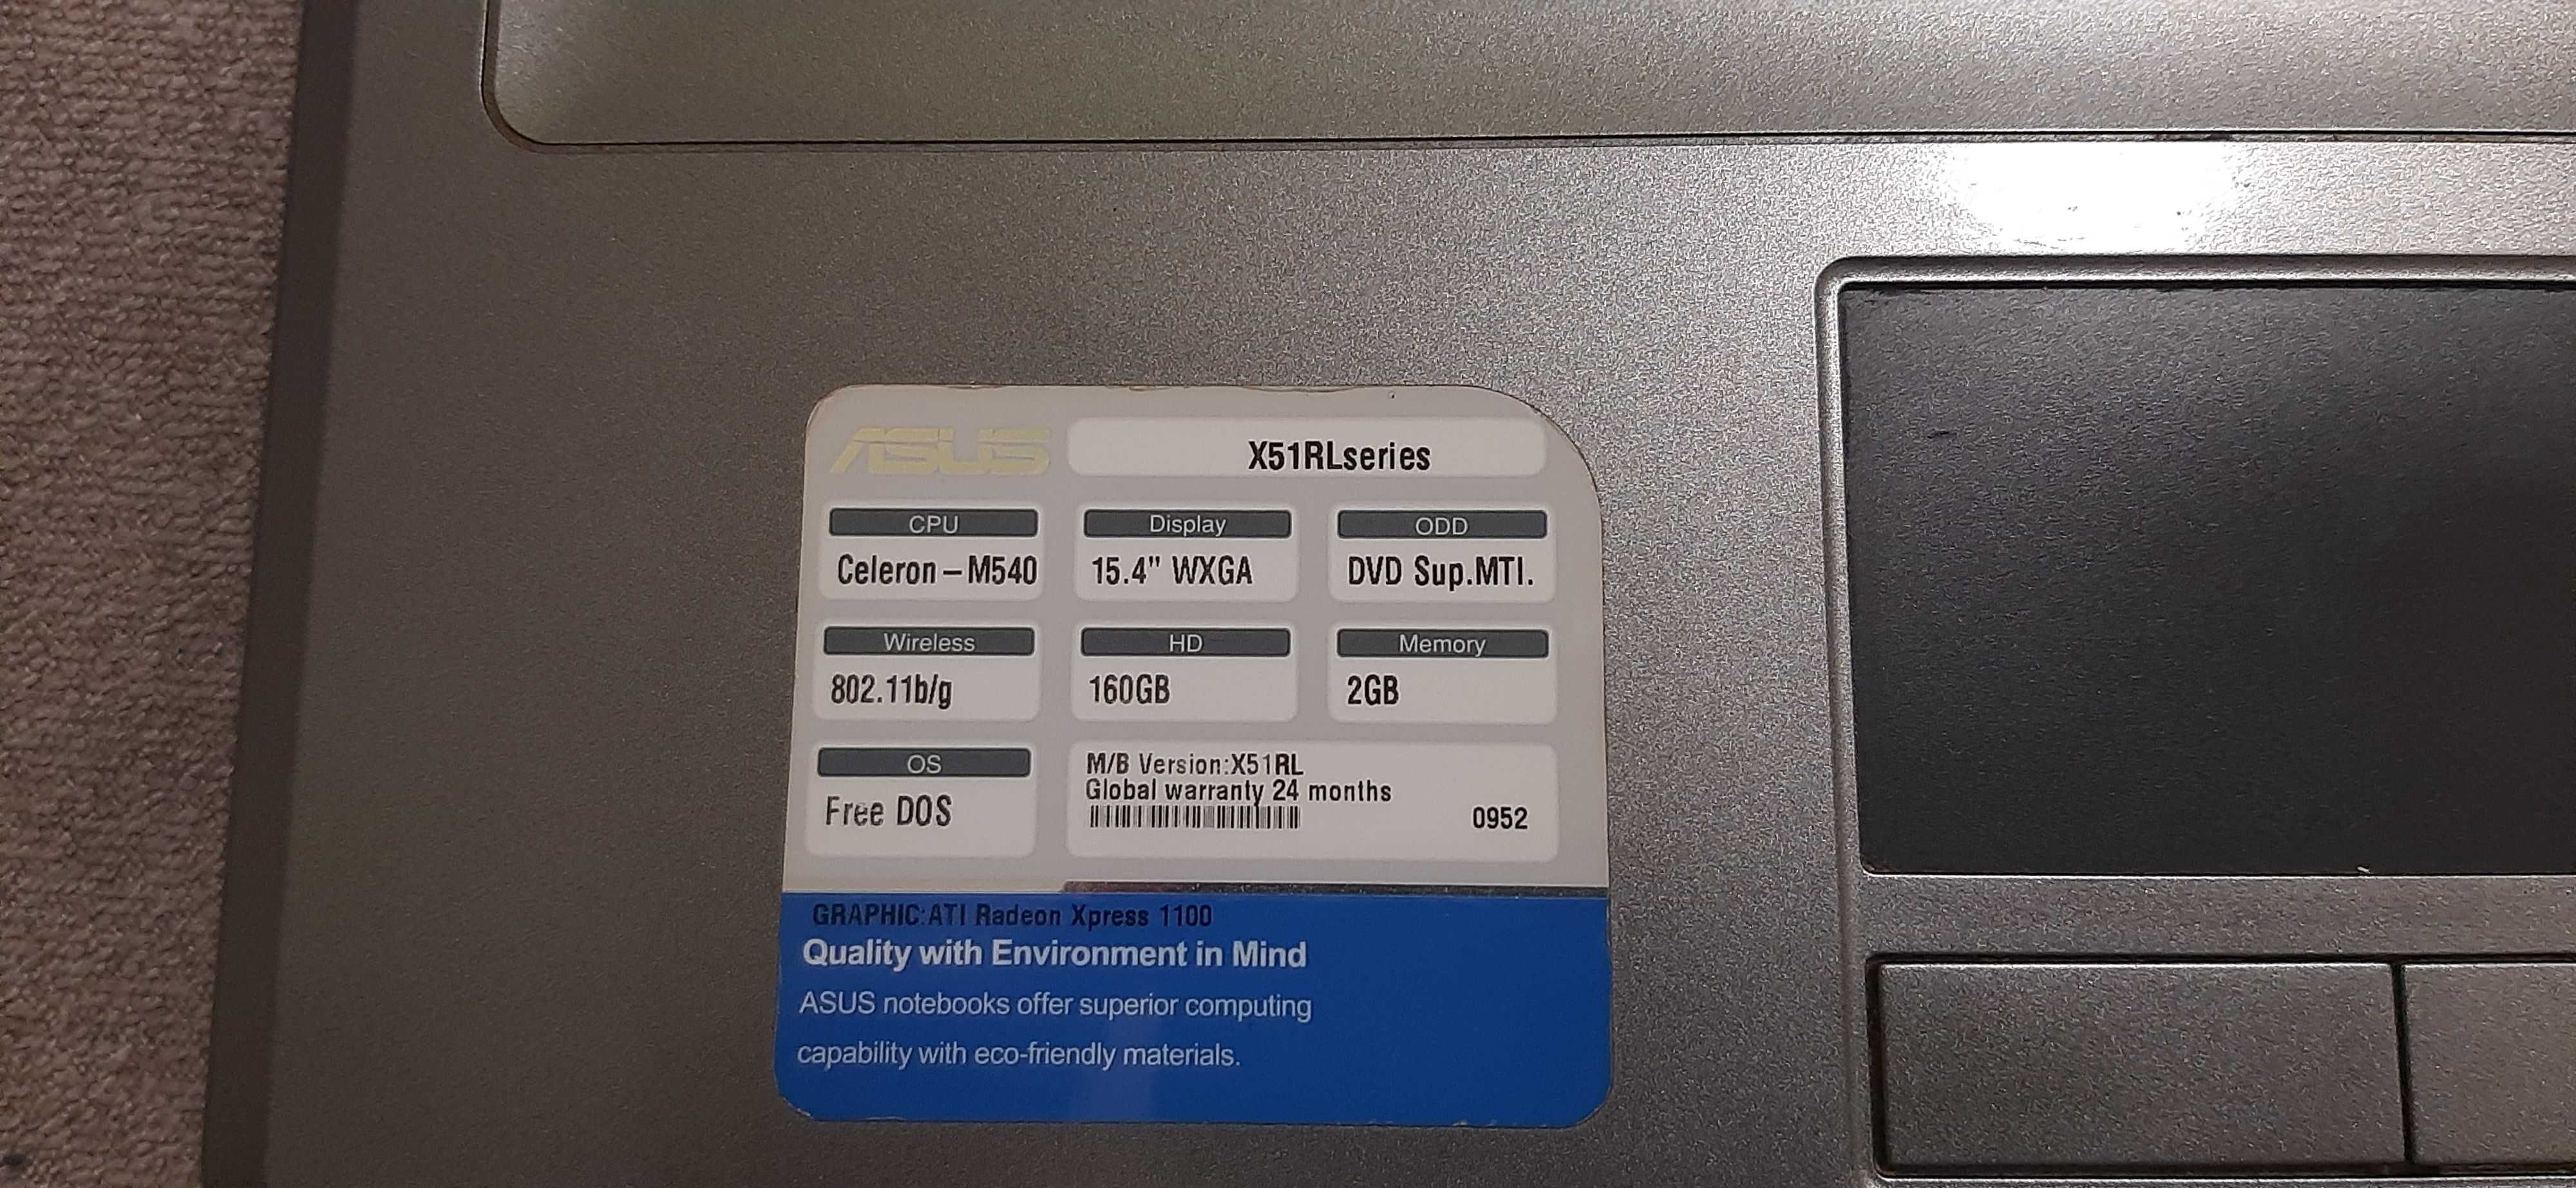 Ноутбук ASUS X51RL Intel Celeron M 540 (1.86 GHz)